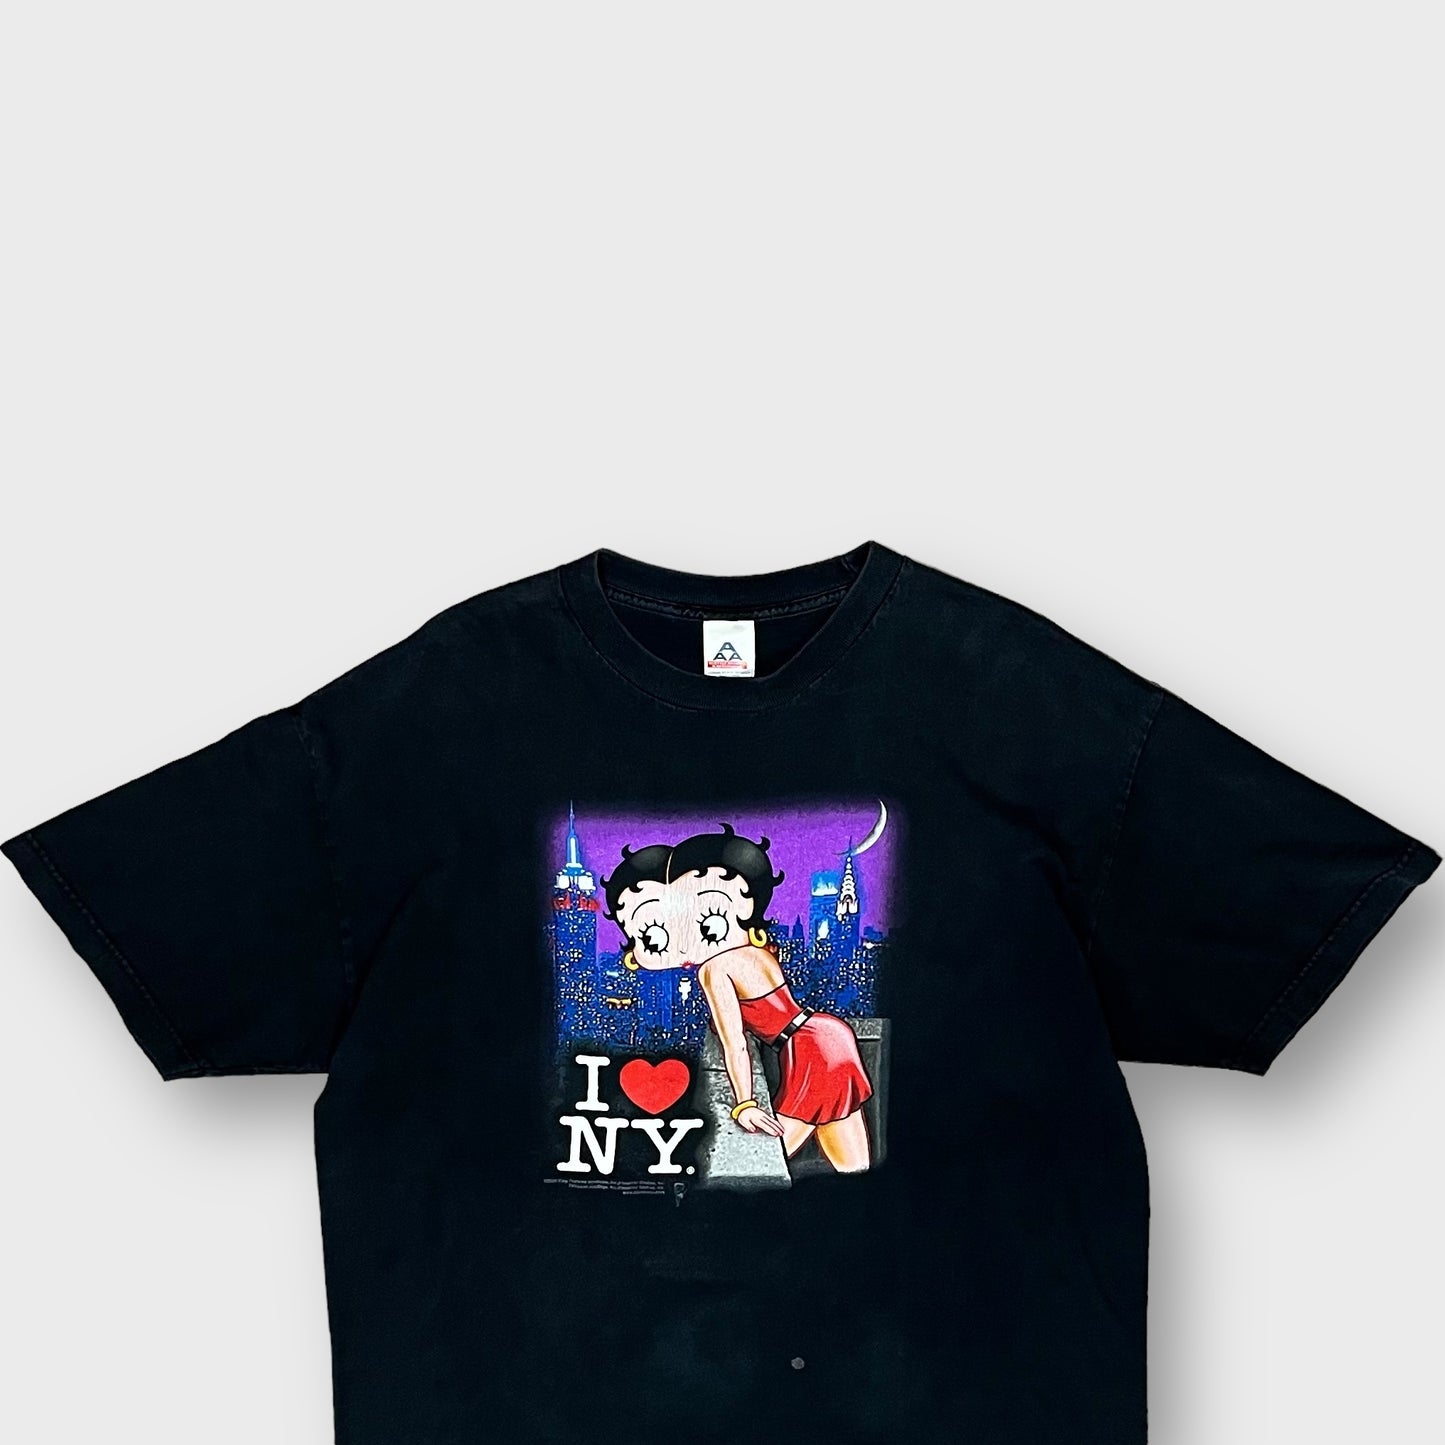 00’s “Betty Boop” character t-shirt